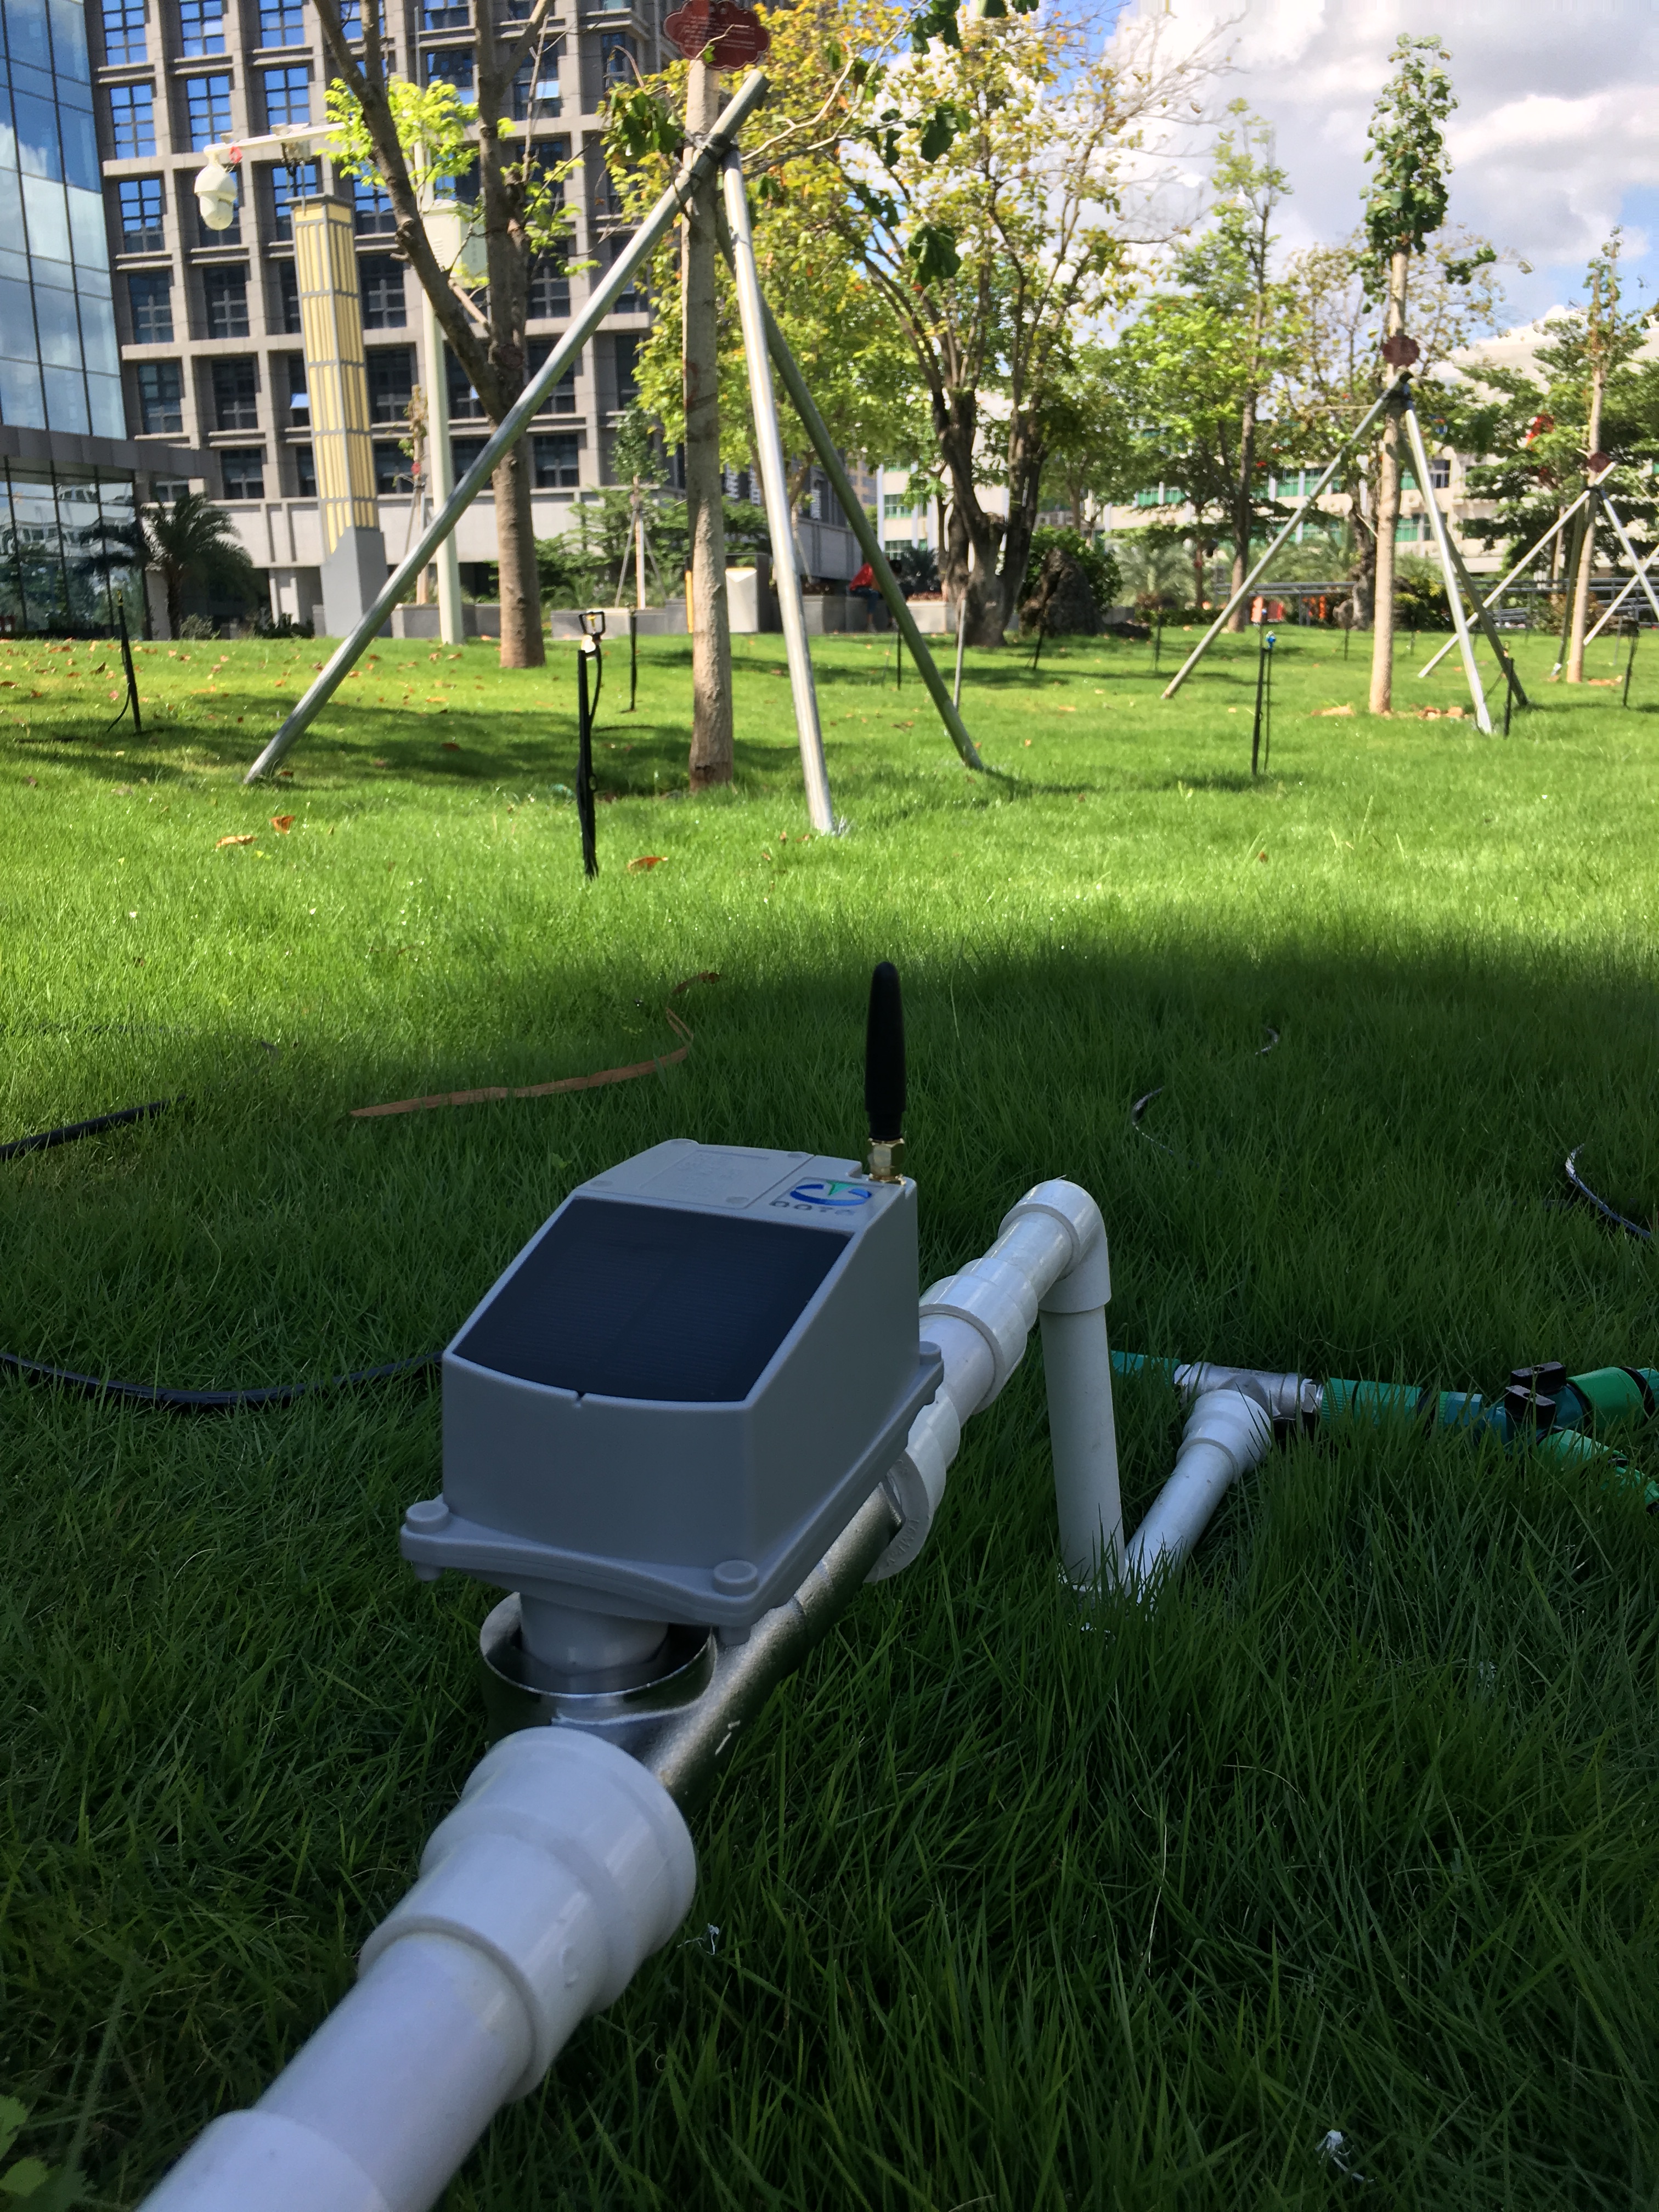 Solar Powered Smart Water Valve with Long Range Wireless Lora-Enabled Sensors